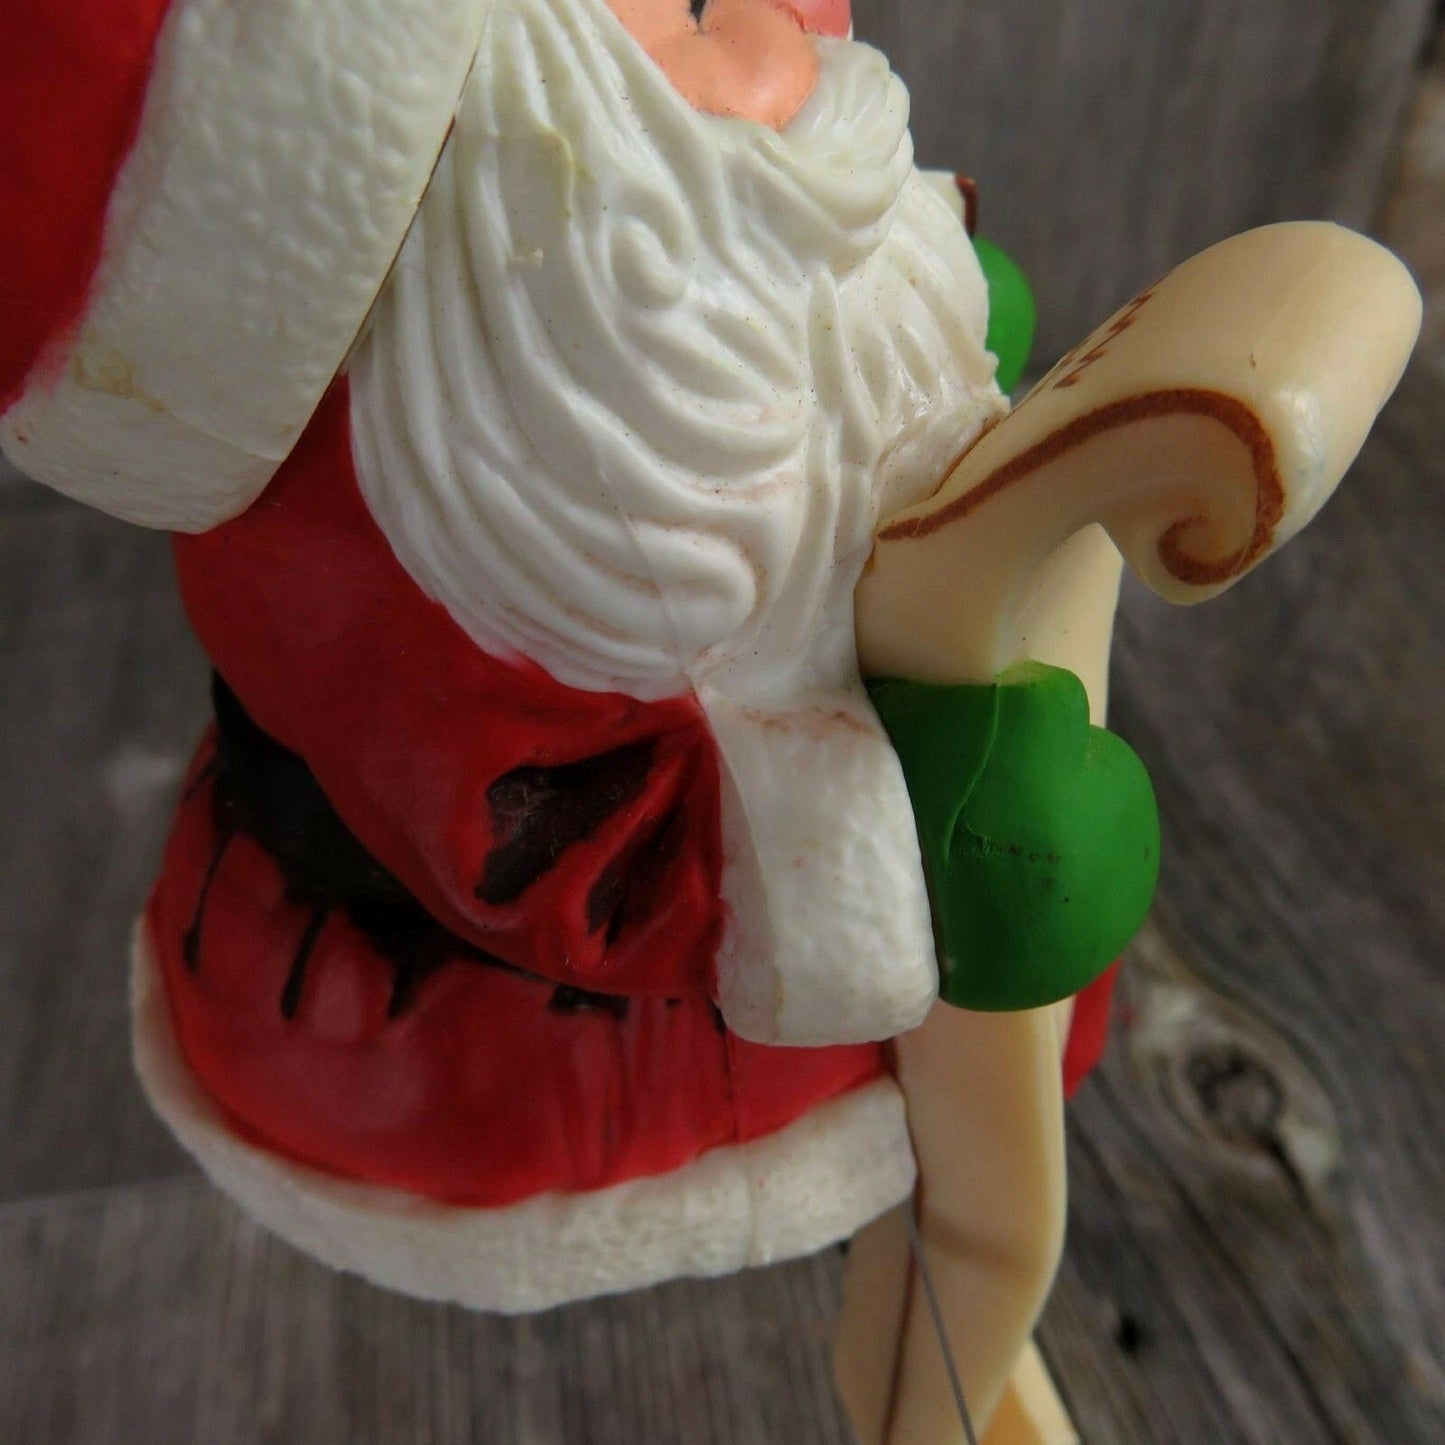 Santa Claus Stocking Holder Vintage Christmas Hallmark Hanger Hook - At Grandma's Table